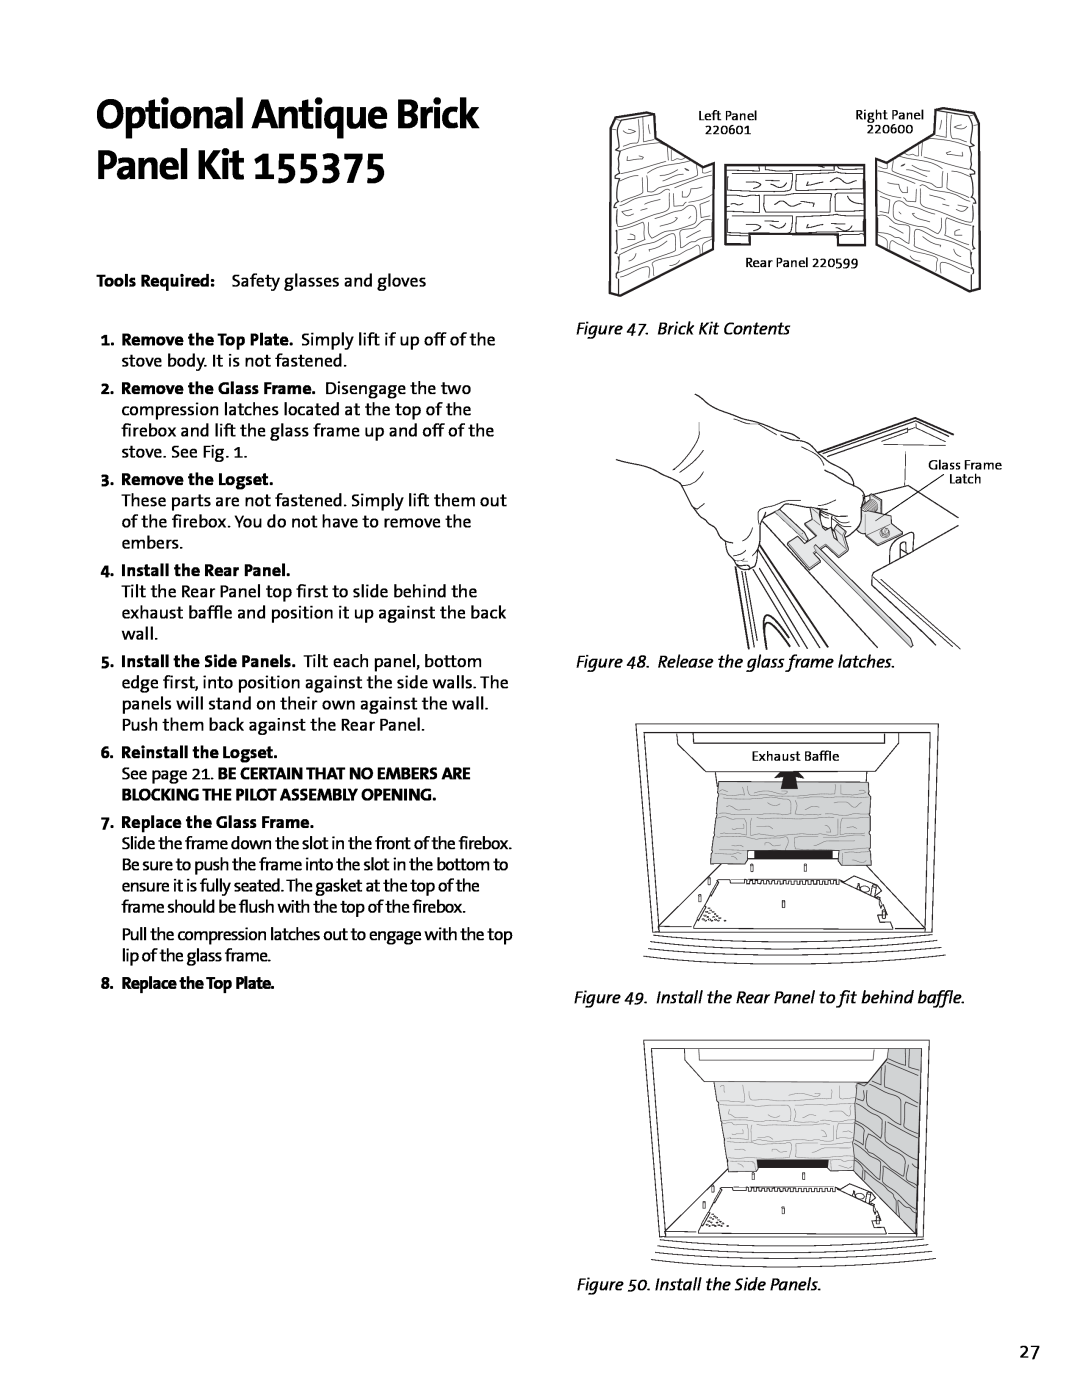 Jotul GF 400 DV manual Optional Antique Brick Panel Kit, Brick Kit Contents, Release the glass frame latches 